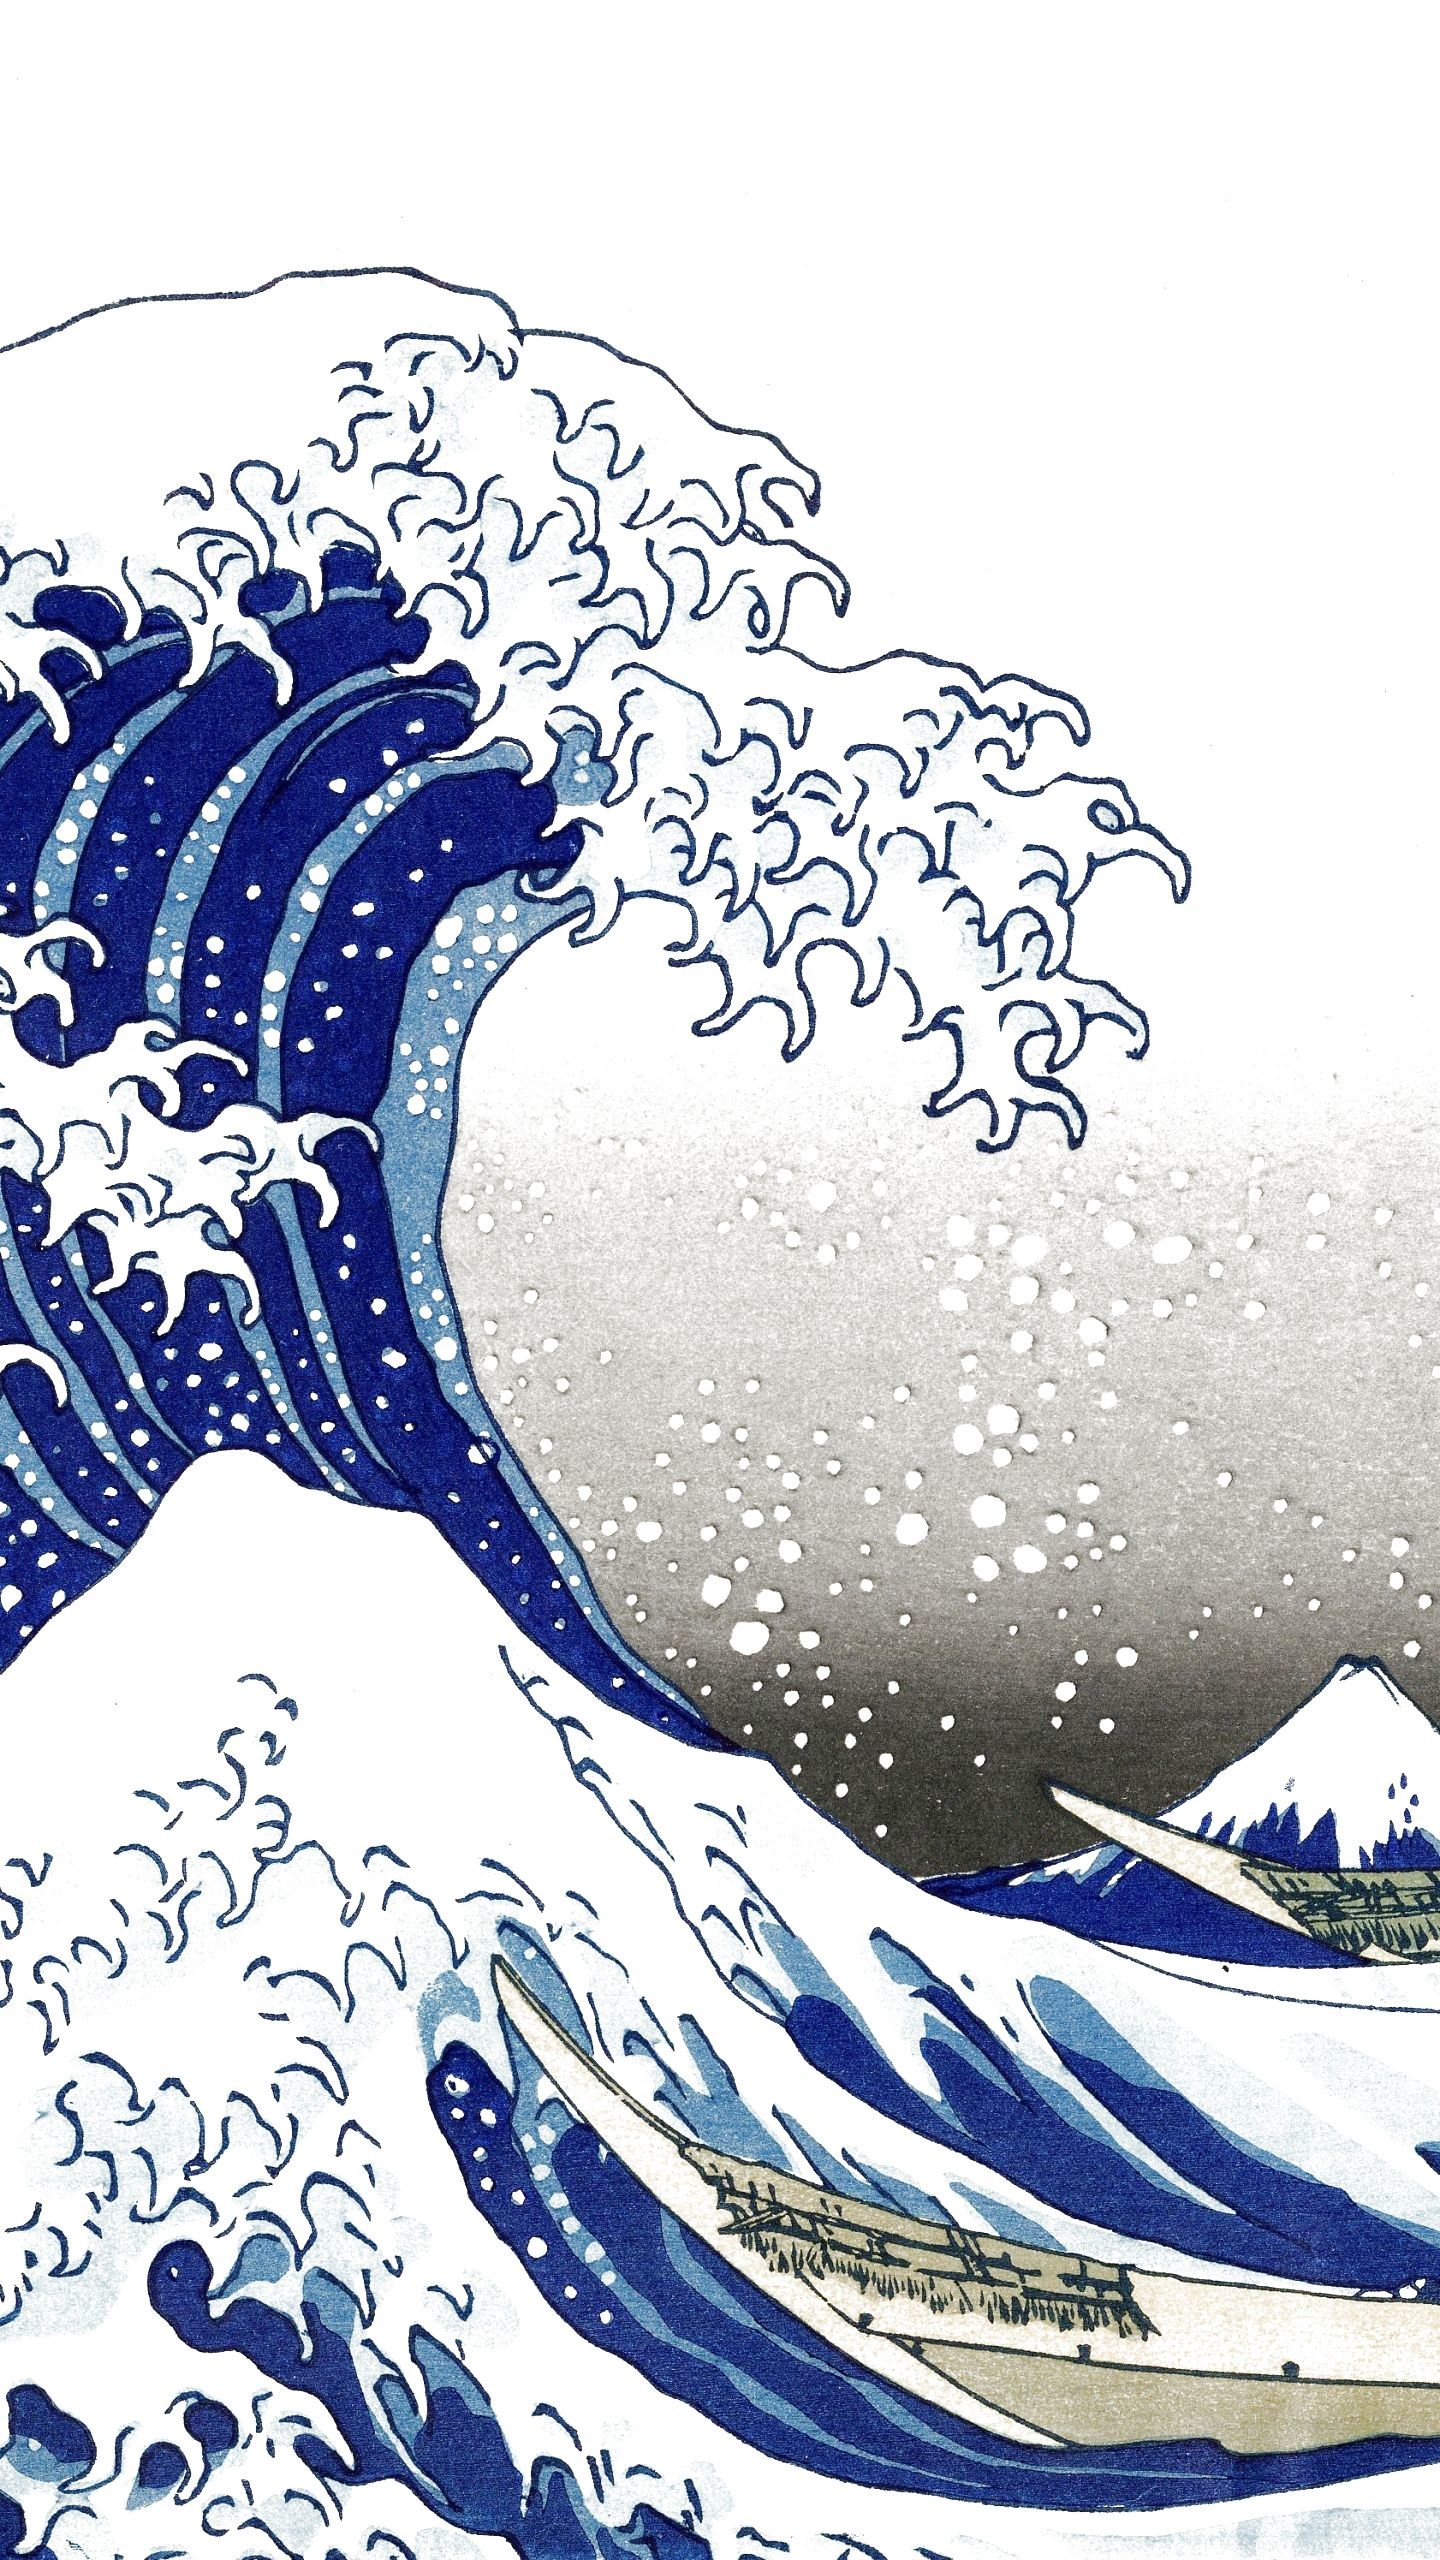 1440x2560 1000x850 The Great Wave off Kanagawa - Hokusai, Self-adhesive Vinyl  Wallpaper ...">